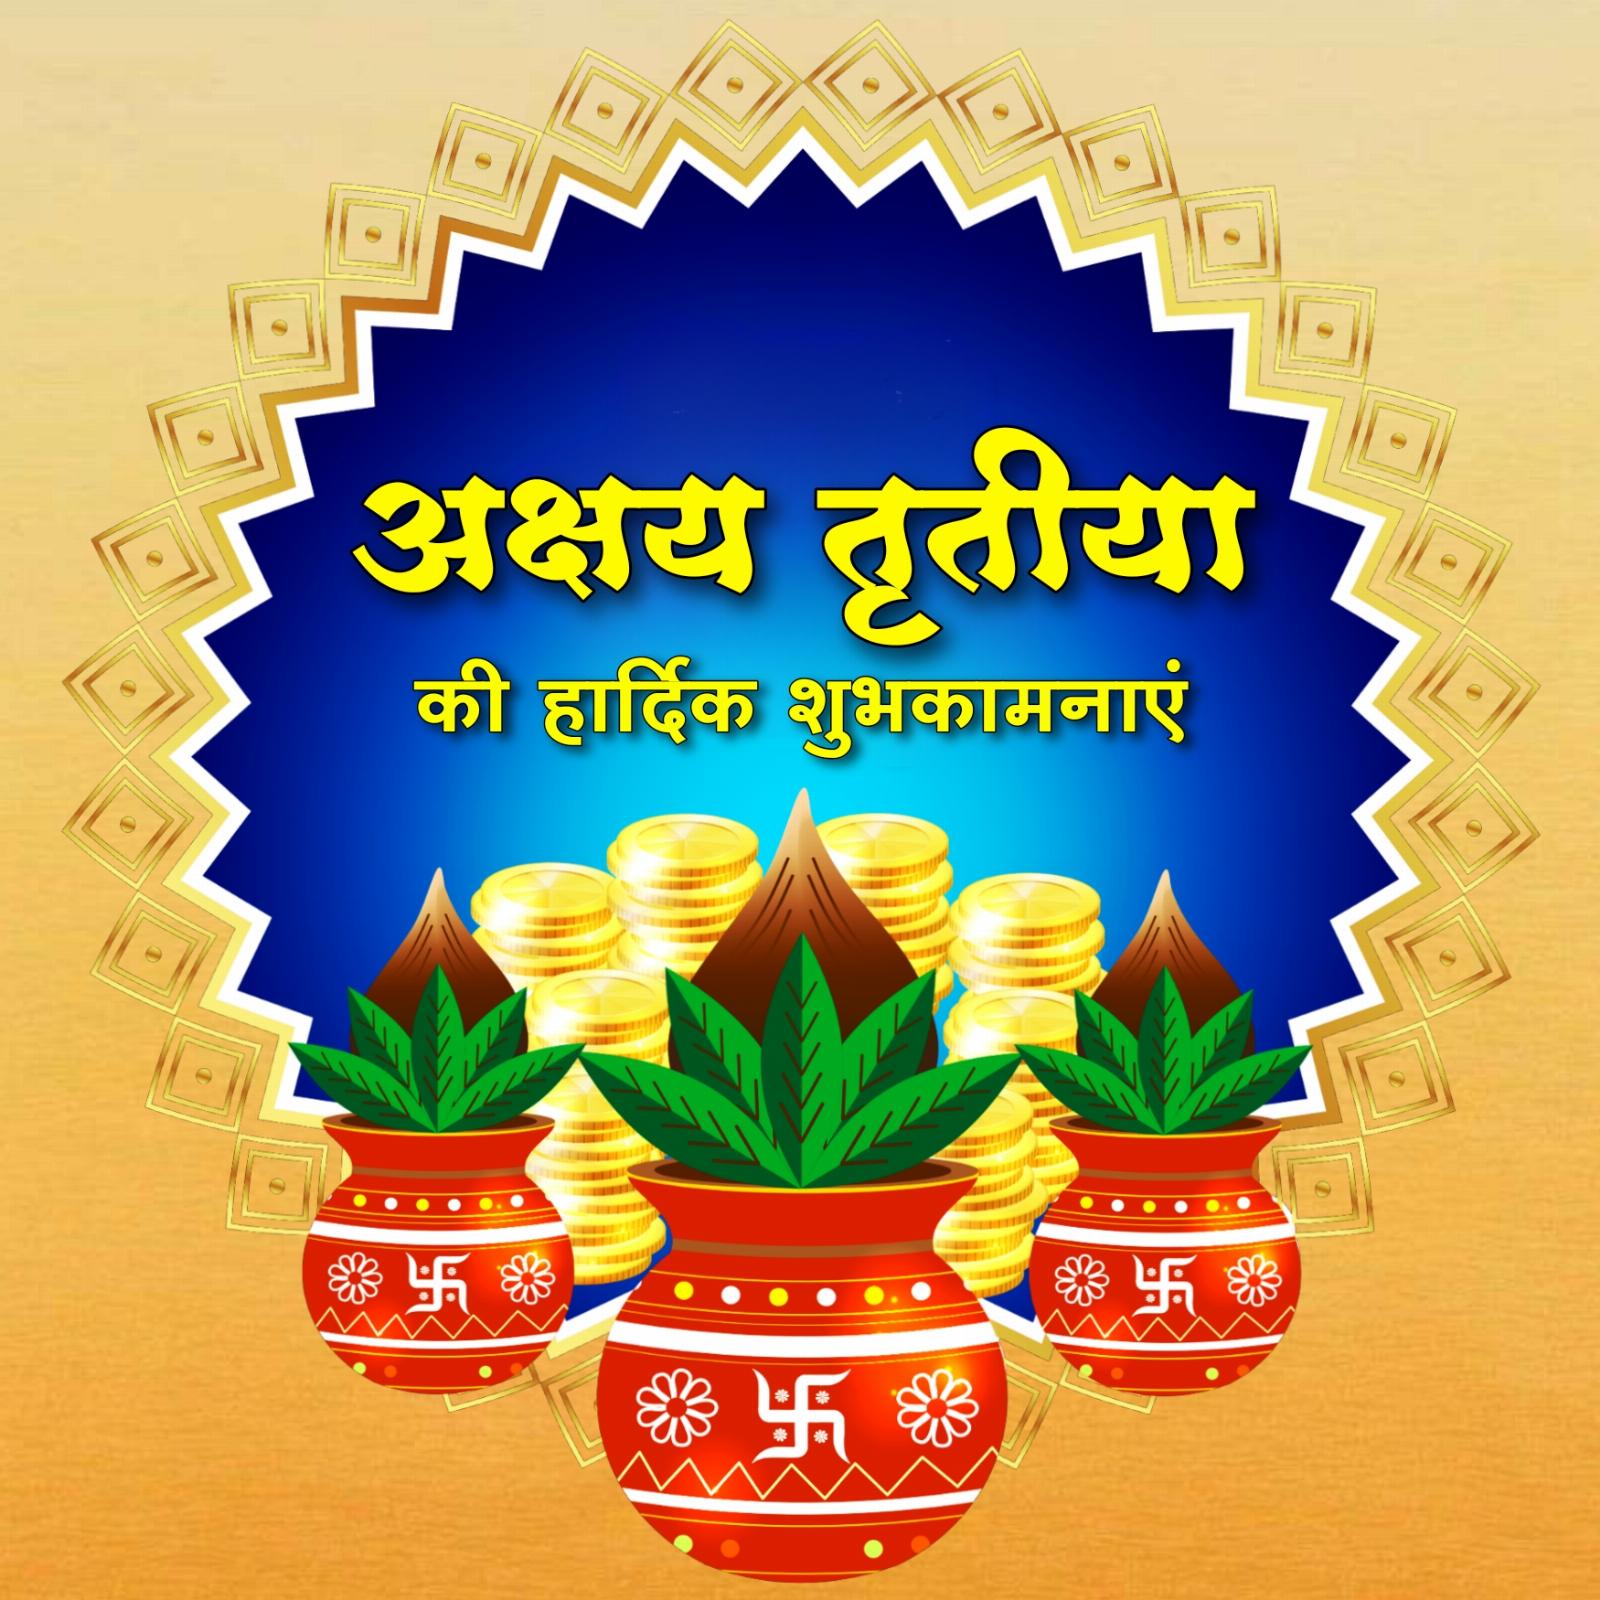 Happy Akshay Tritiya Images in Hindi